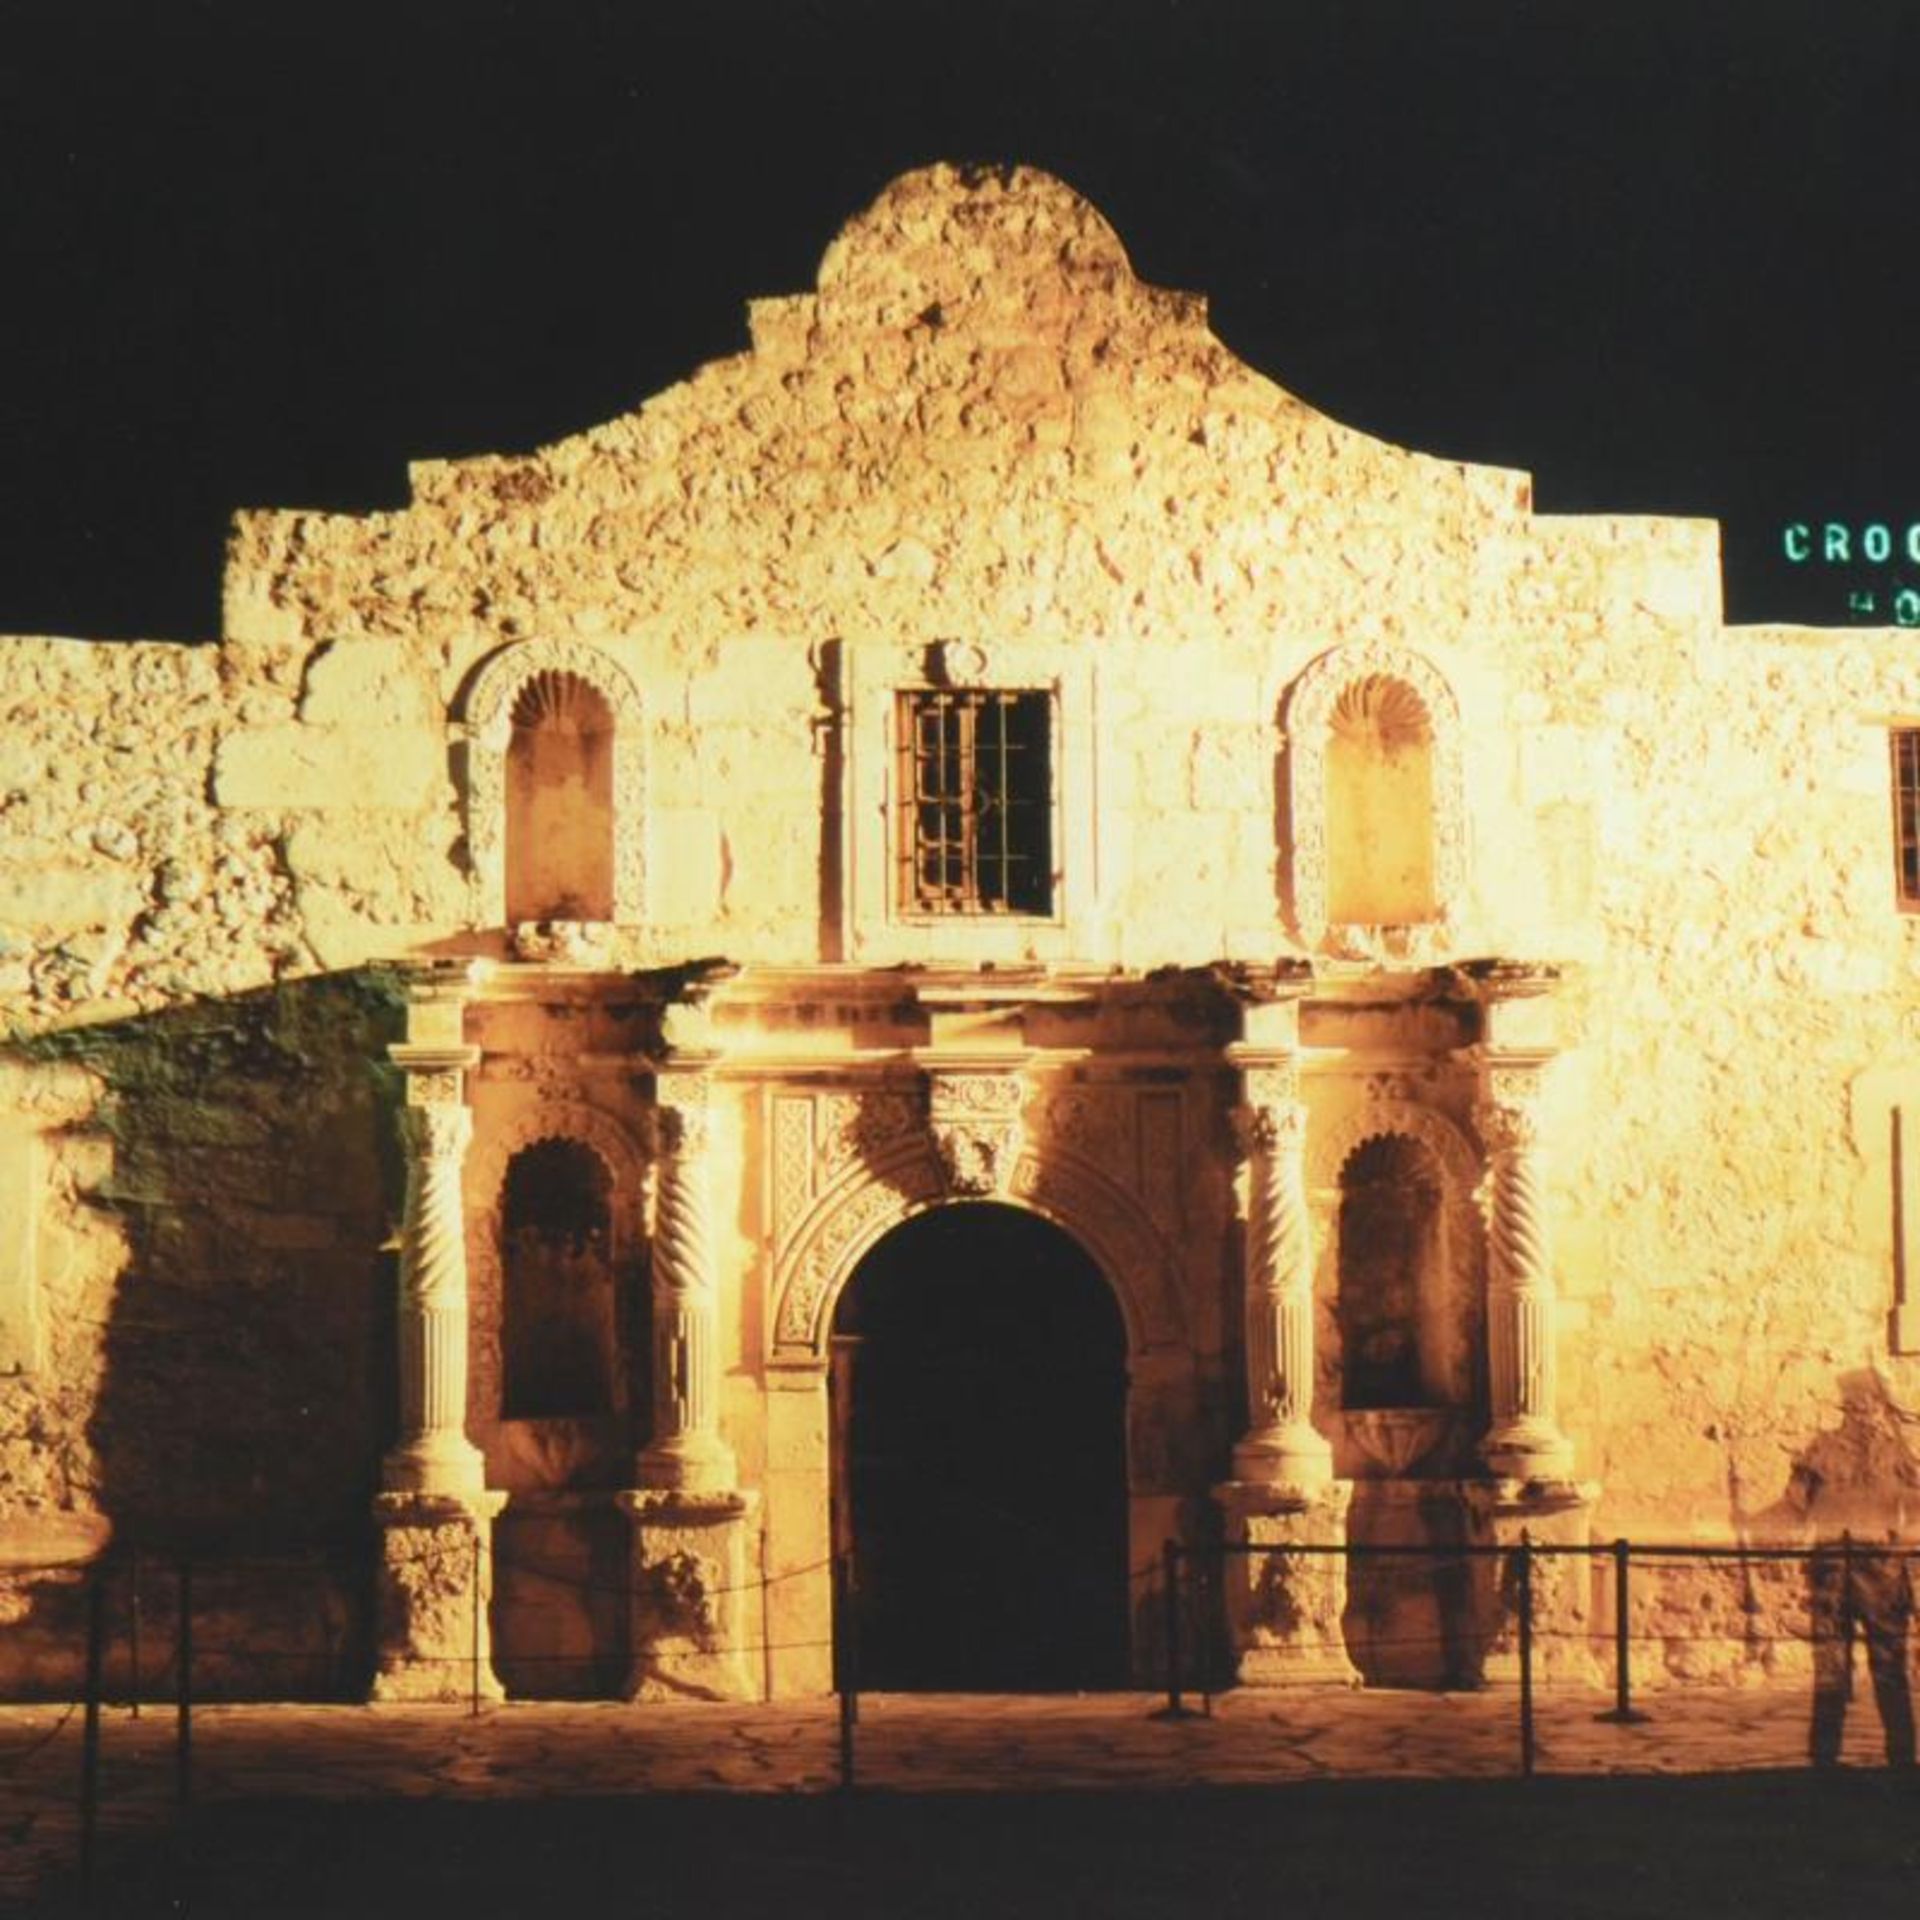 Robert Sheer, "Davy Crockett at the Alamo" Limited Edition Single Exposure Photo - Image 2 of 2